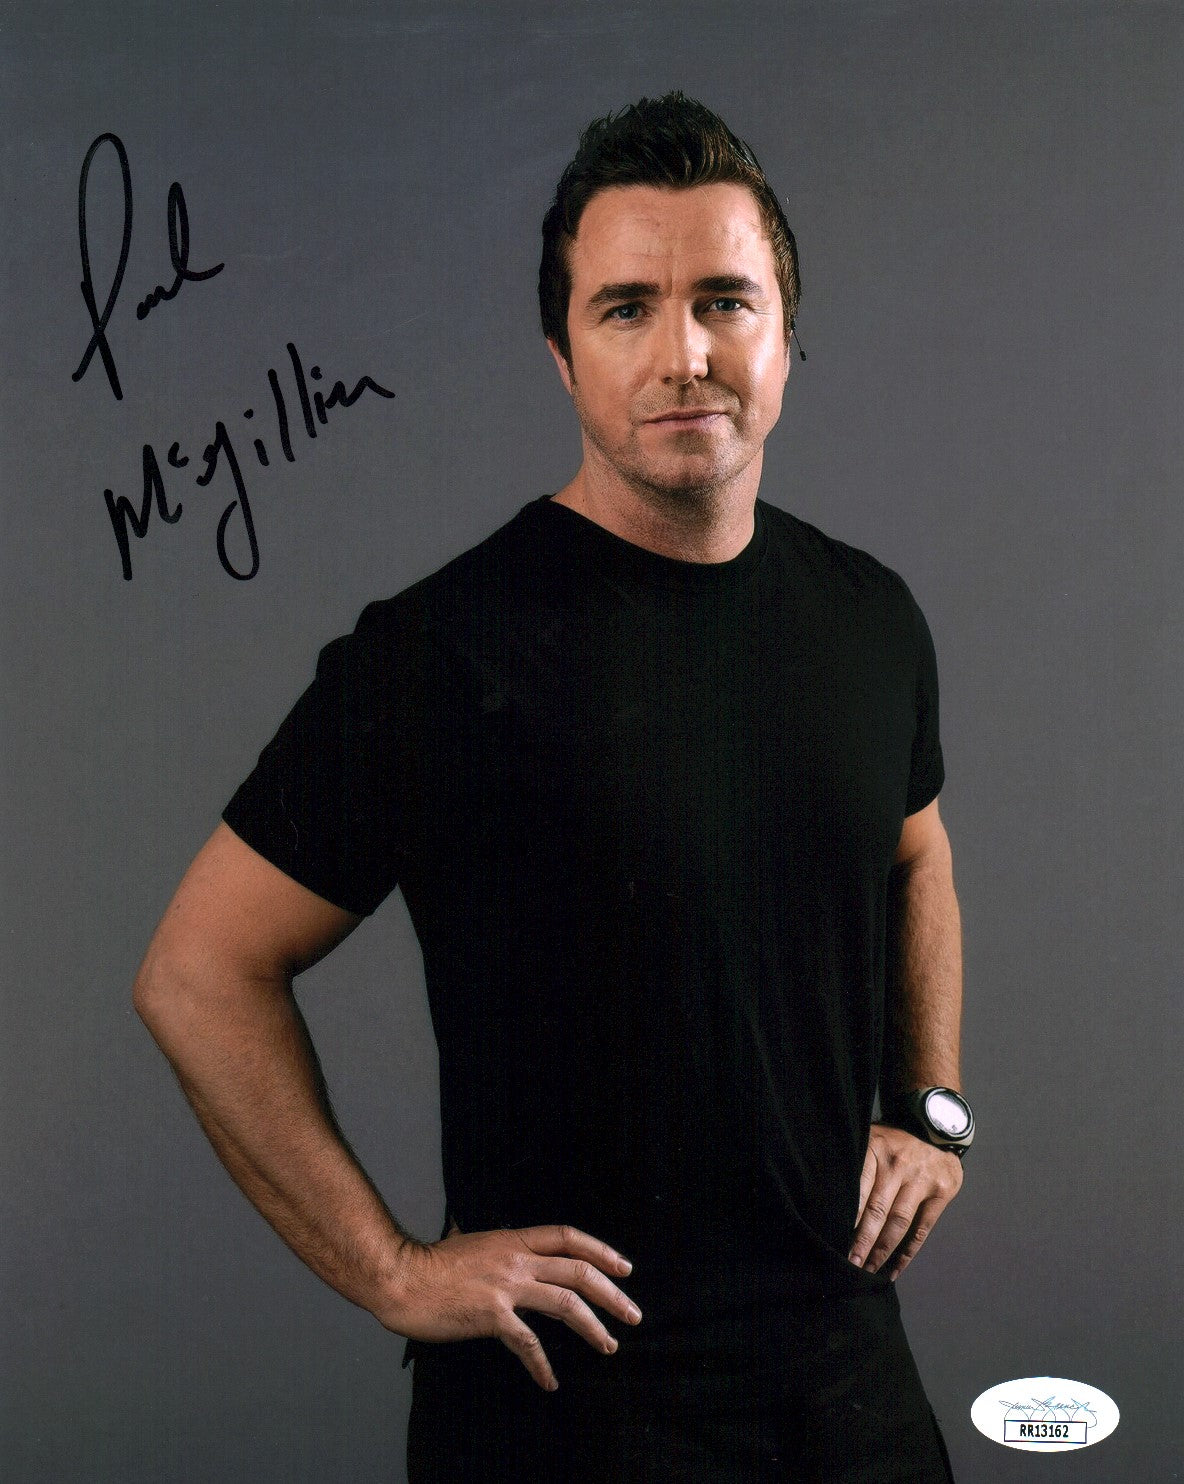 Paul McGillion Stargate Atlantis 8x10 Signed Photo JSA COA Certified Autograph